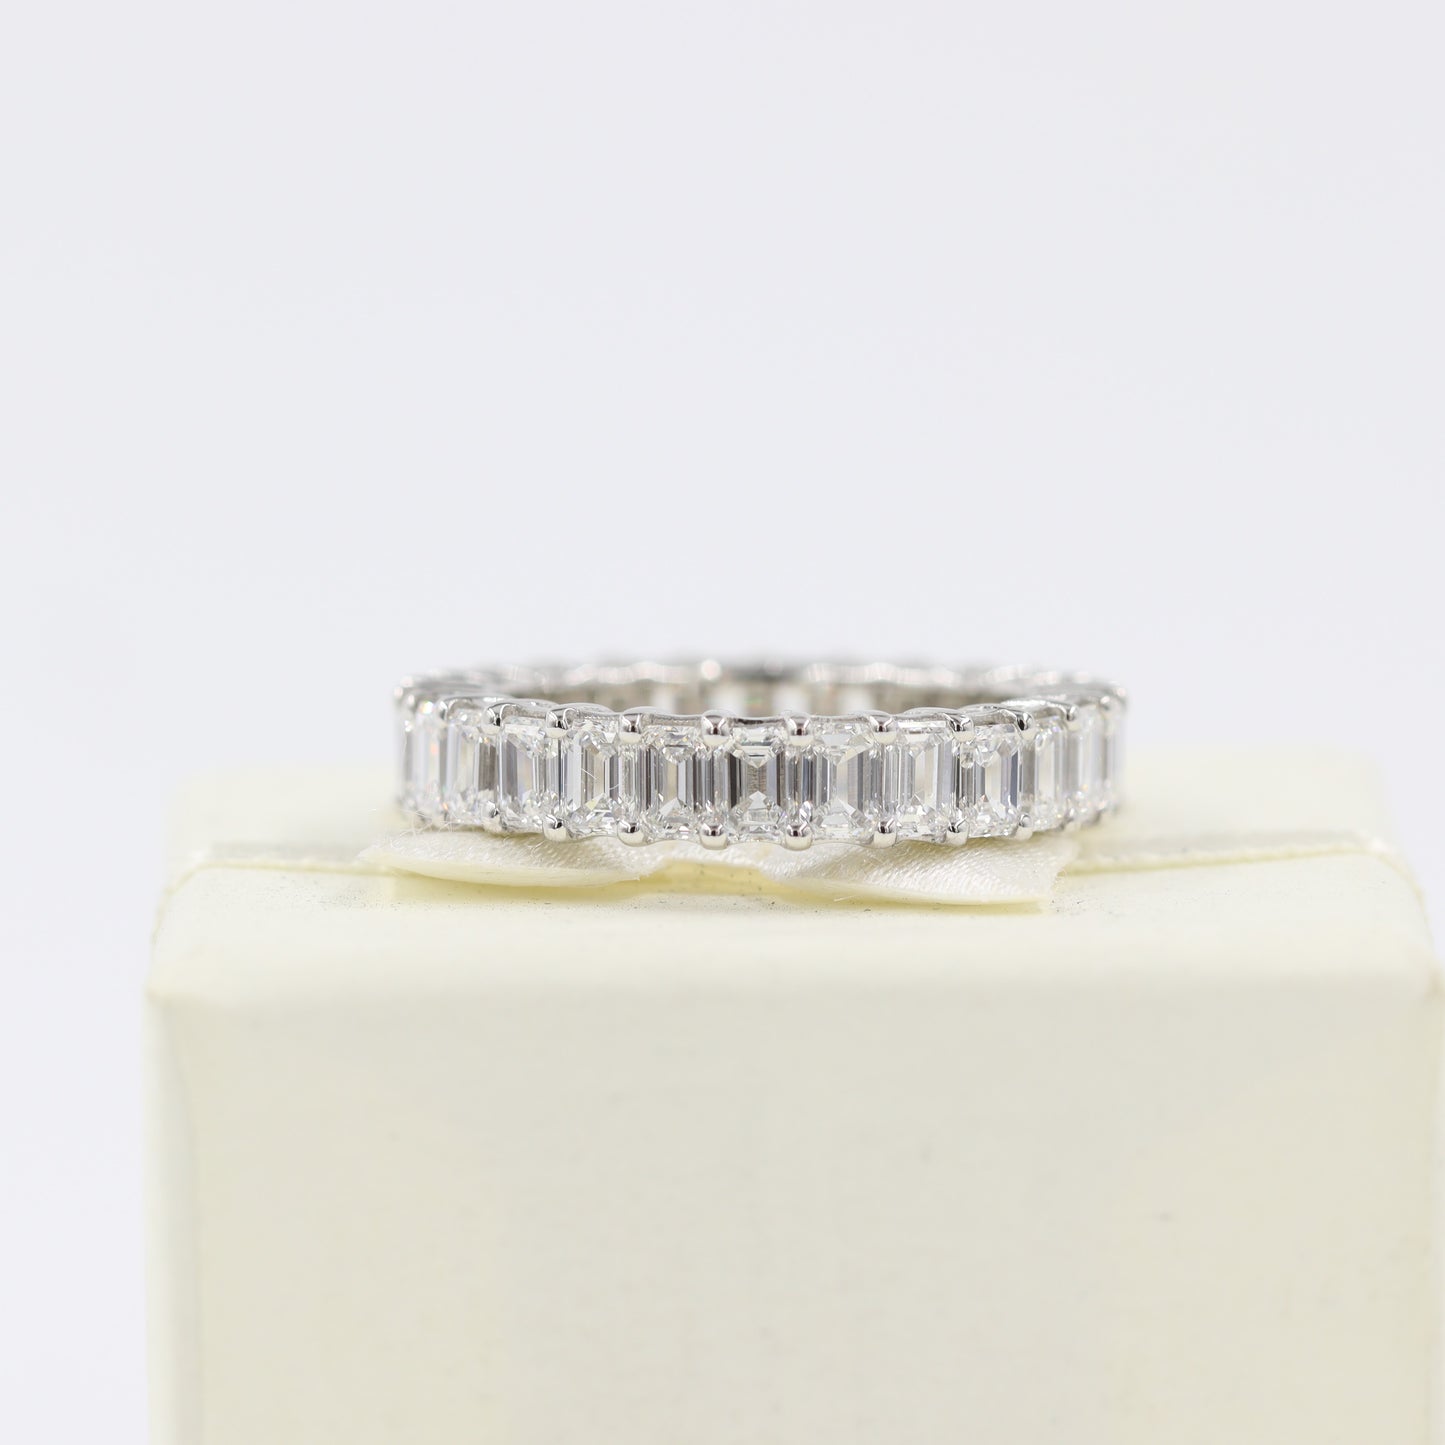 3.8ct Emerald Cut Diamond Ring/Emerald Cut Diamond Wedding Band/ Full Eternity Width 4.3mm Double Wire Setting Wedding Ring/Anniversary gift